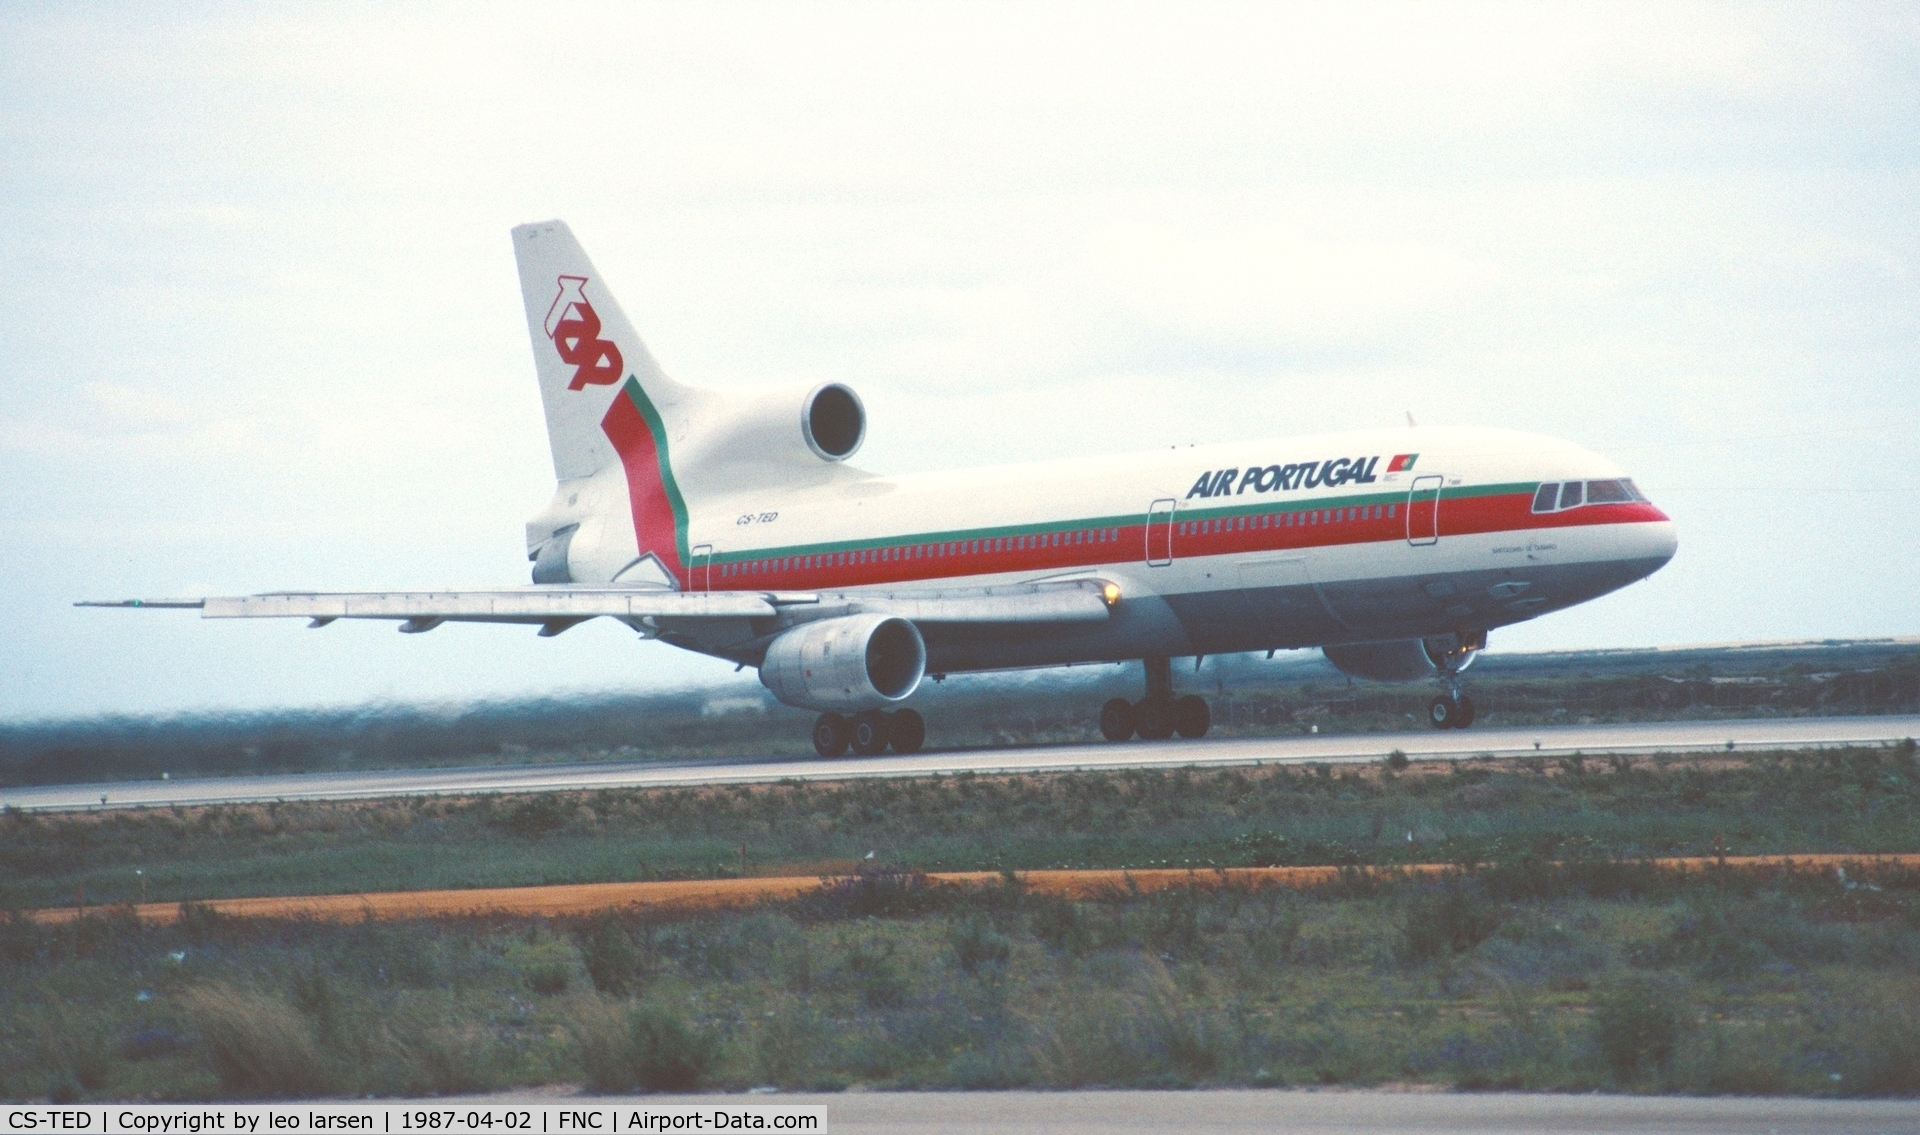 CS-TED, 1983 Lockheed L-1011 Tristar 500 C/N 293B-1242, Funchal 2.4.1987